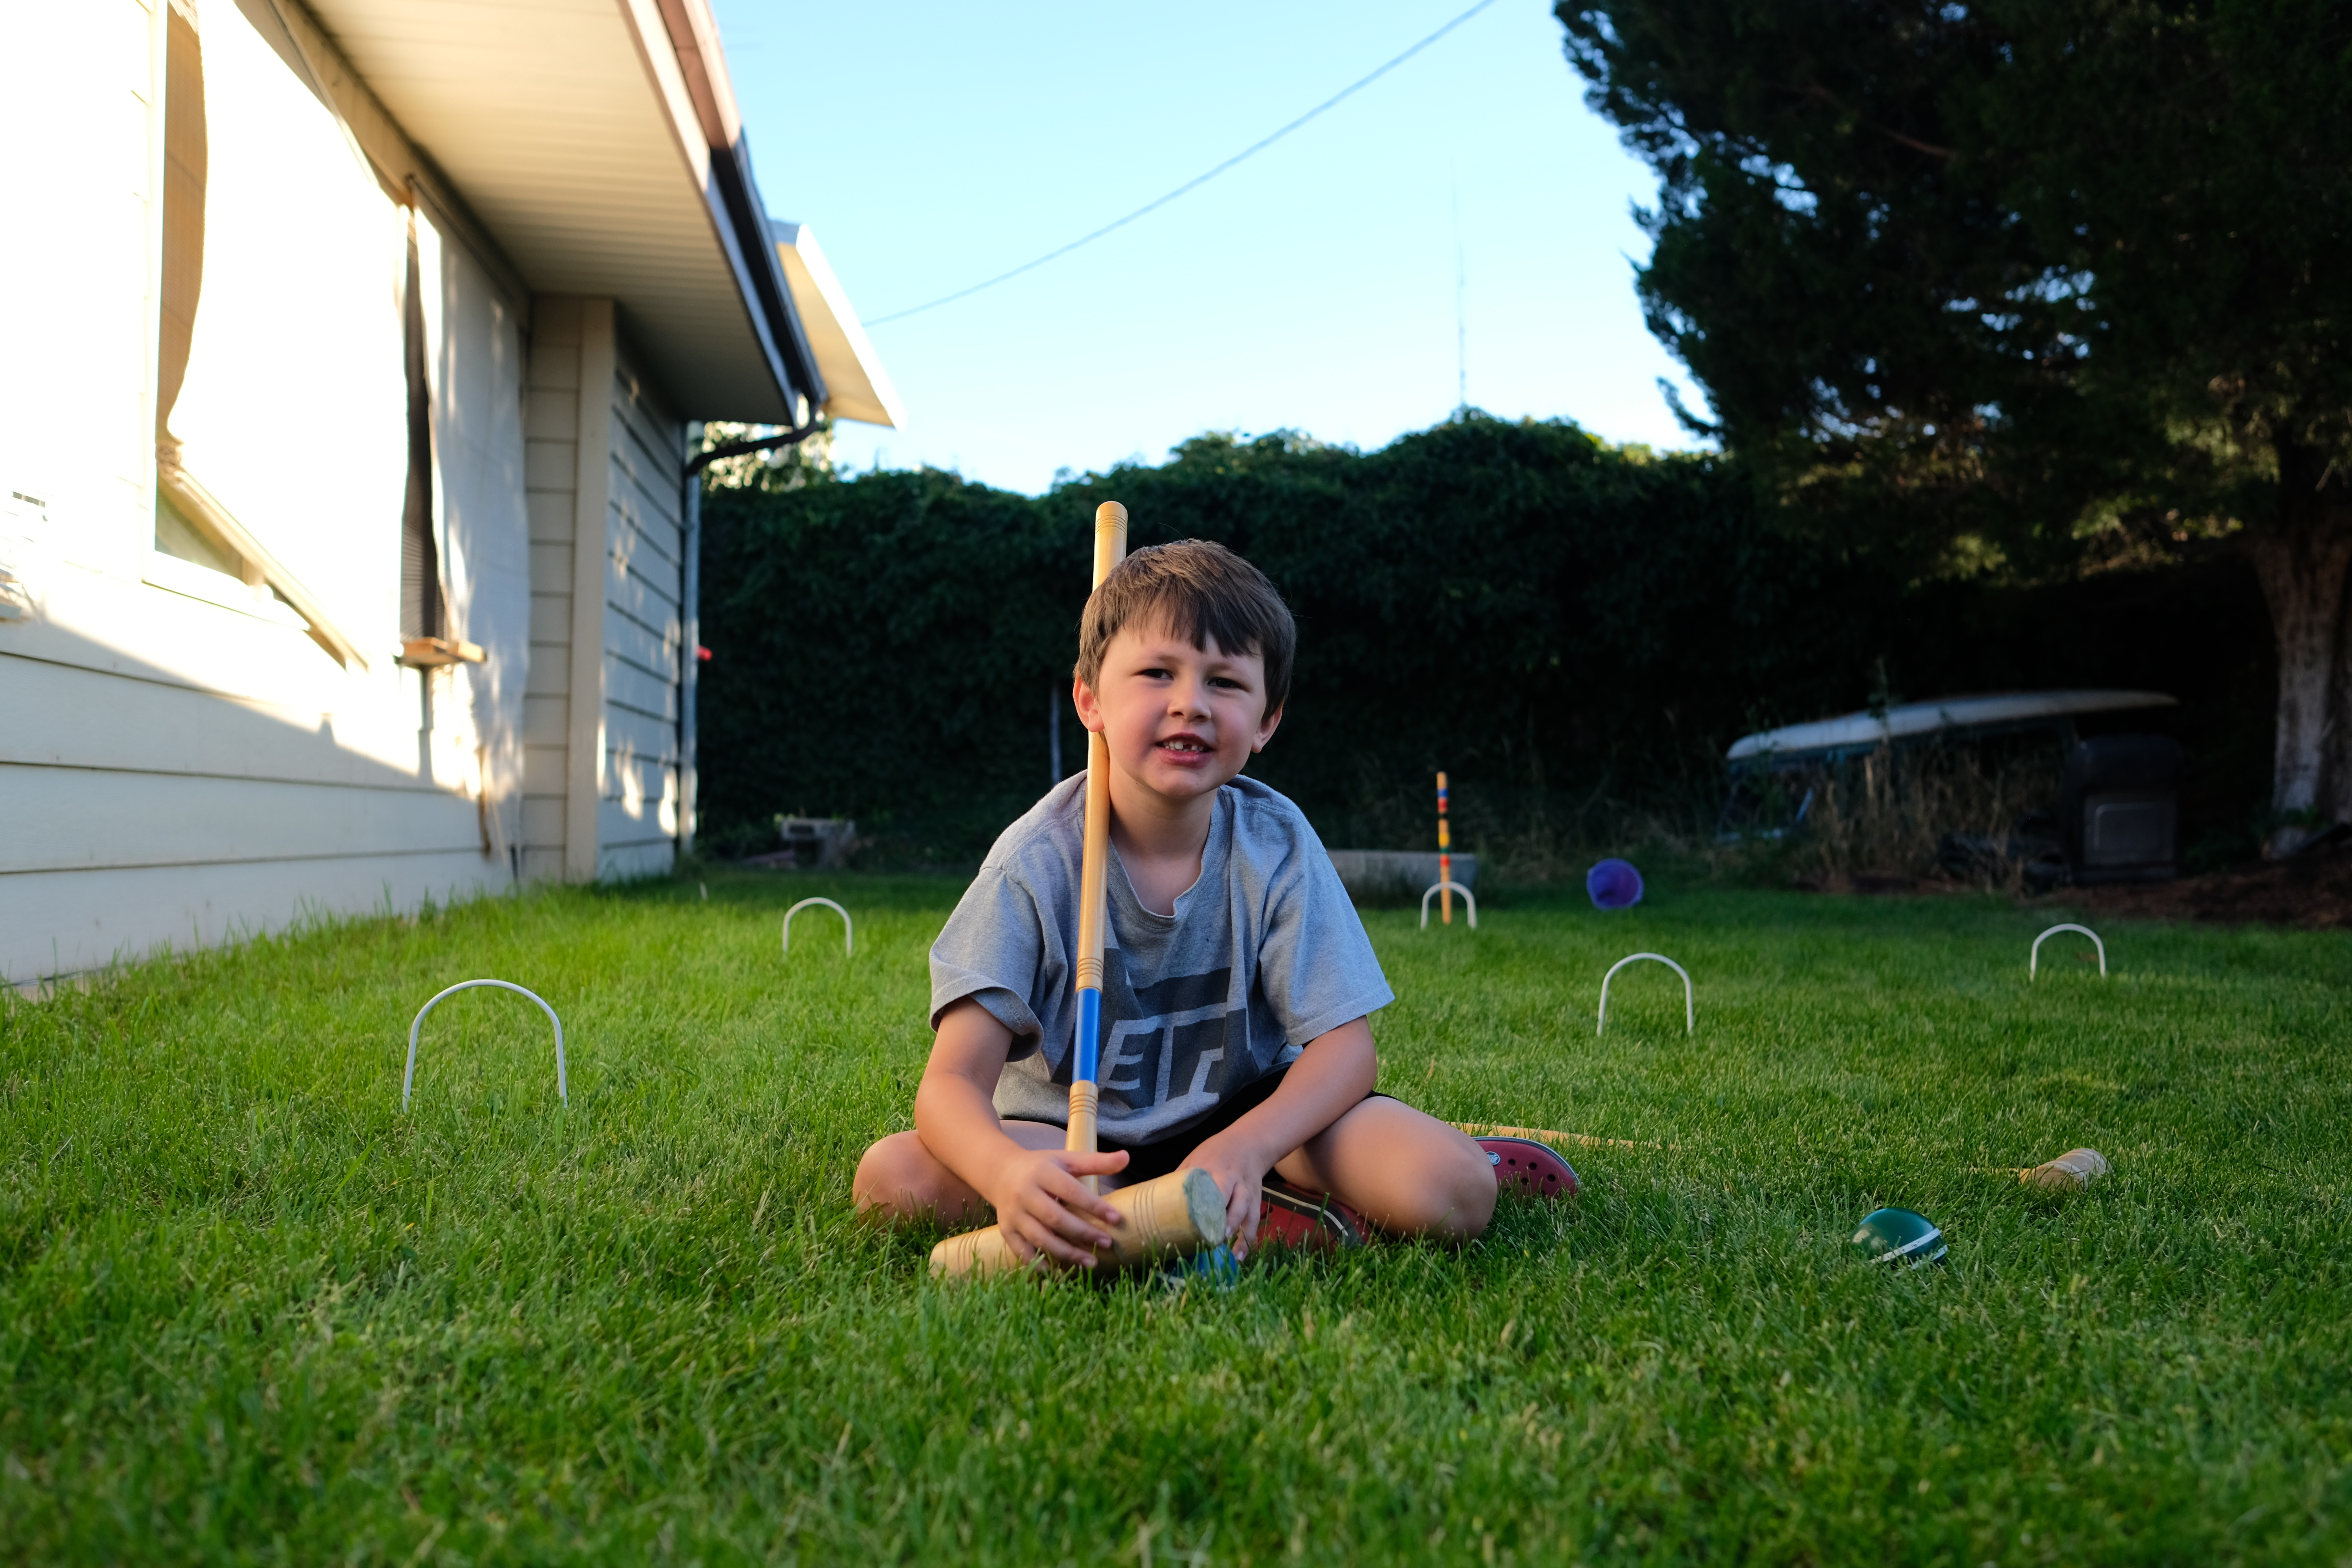 Emmett sitting on the grass holding a croquet mallet